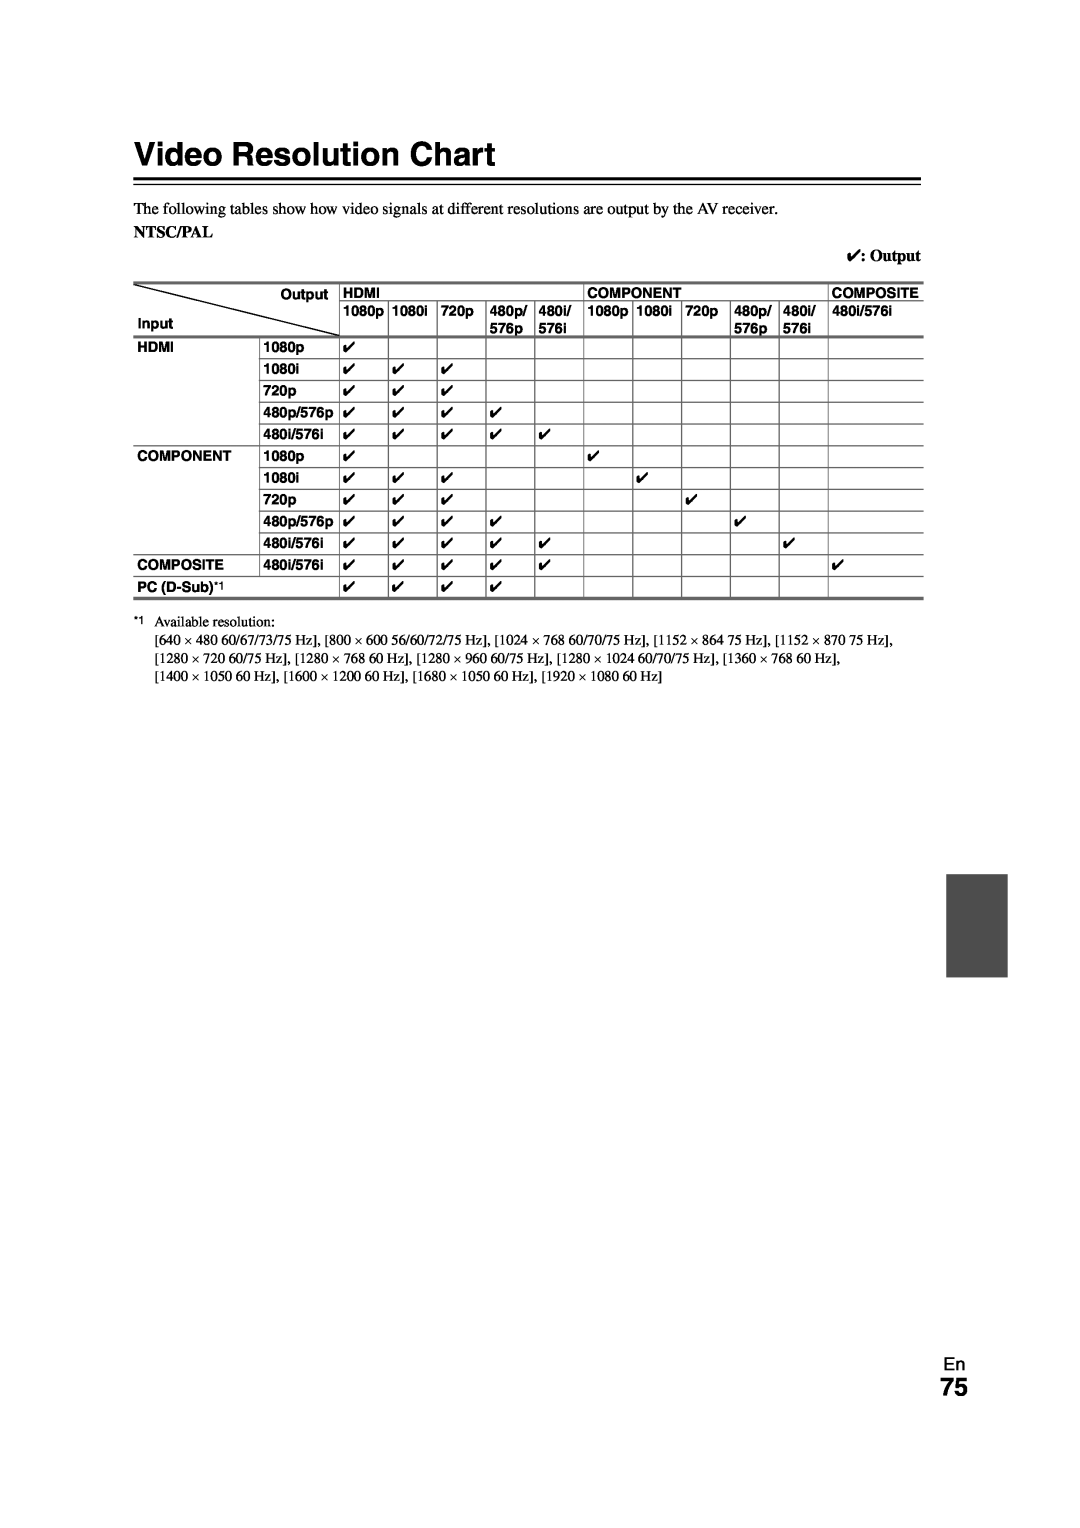 Onkyo SR608 instruction manual Video Resolution Chart, Ntsc/Pal, Output 